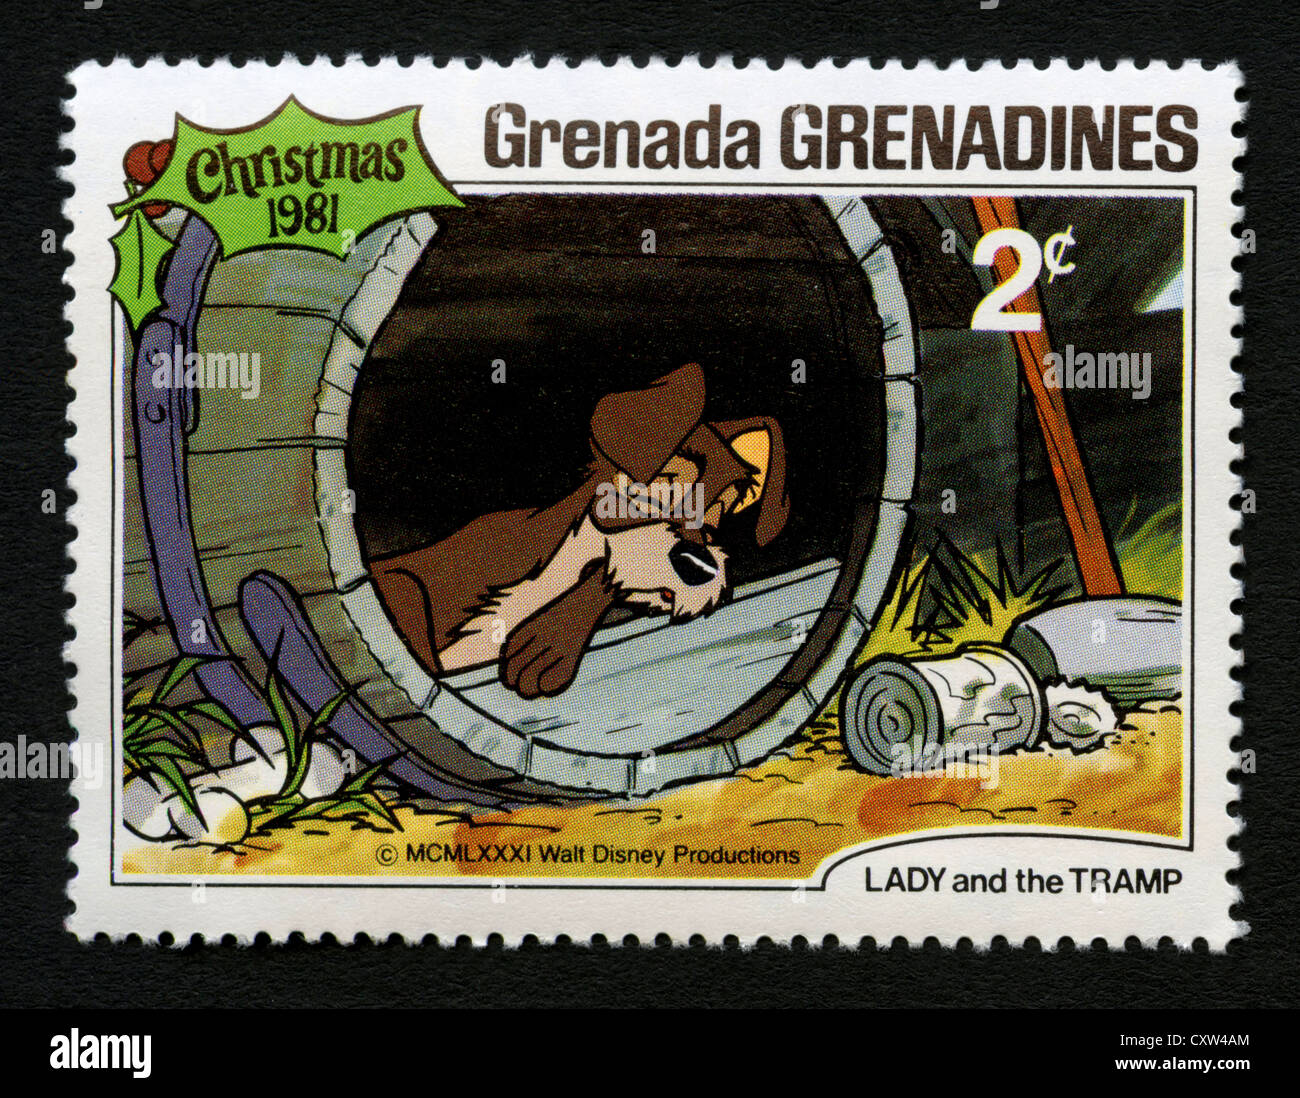 Grenada postage stamp - Lady and the Tramp Disney cartoon Stock Photo